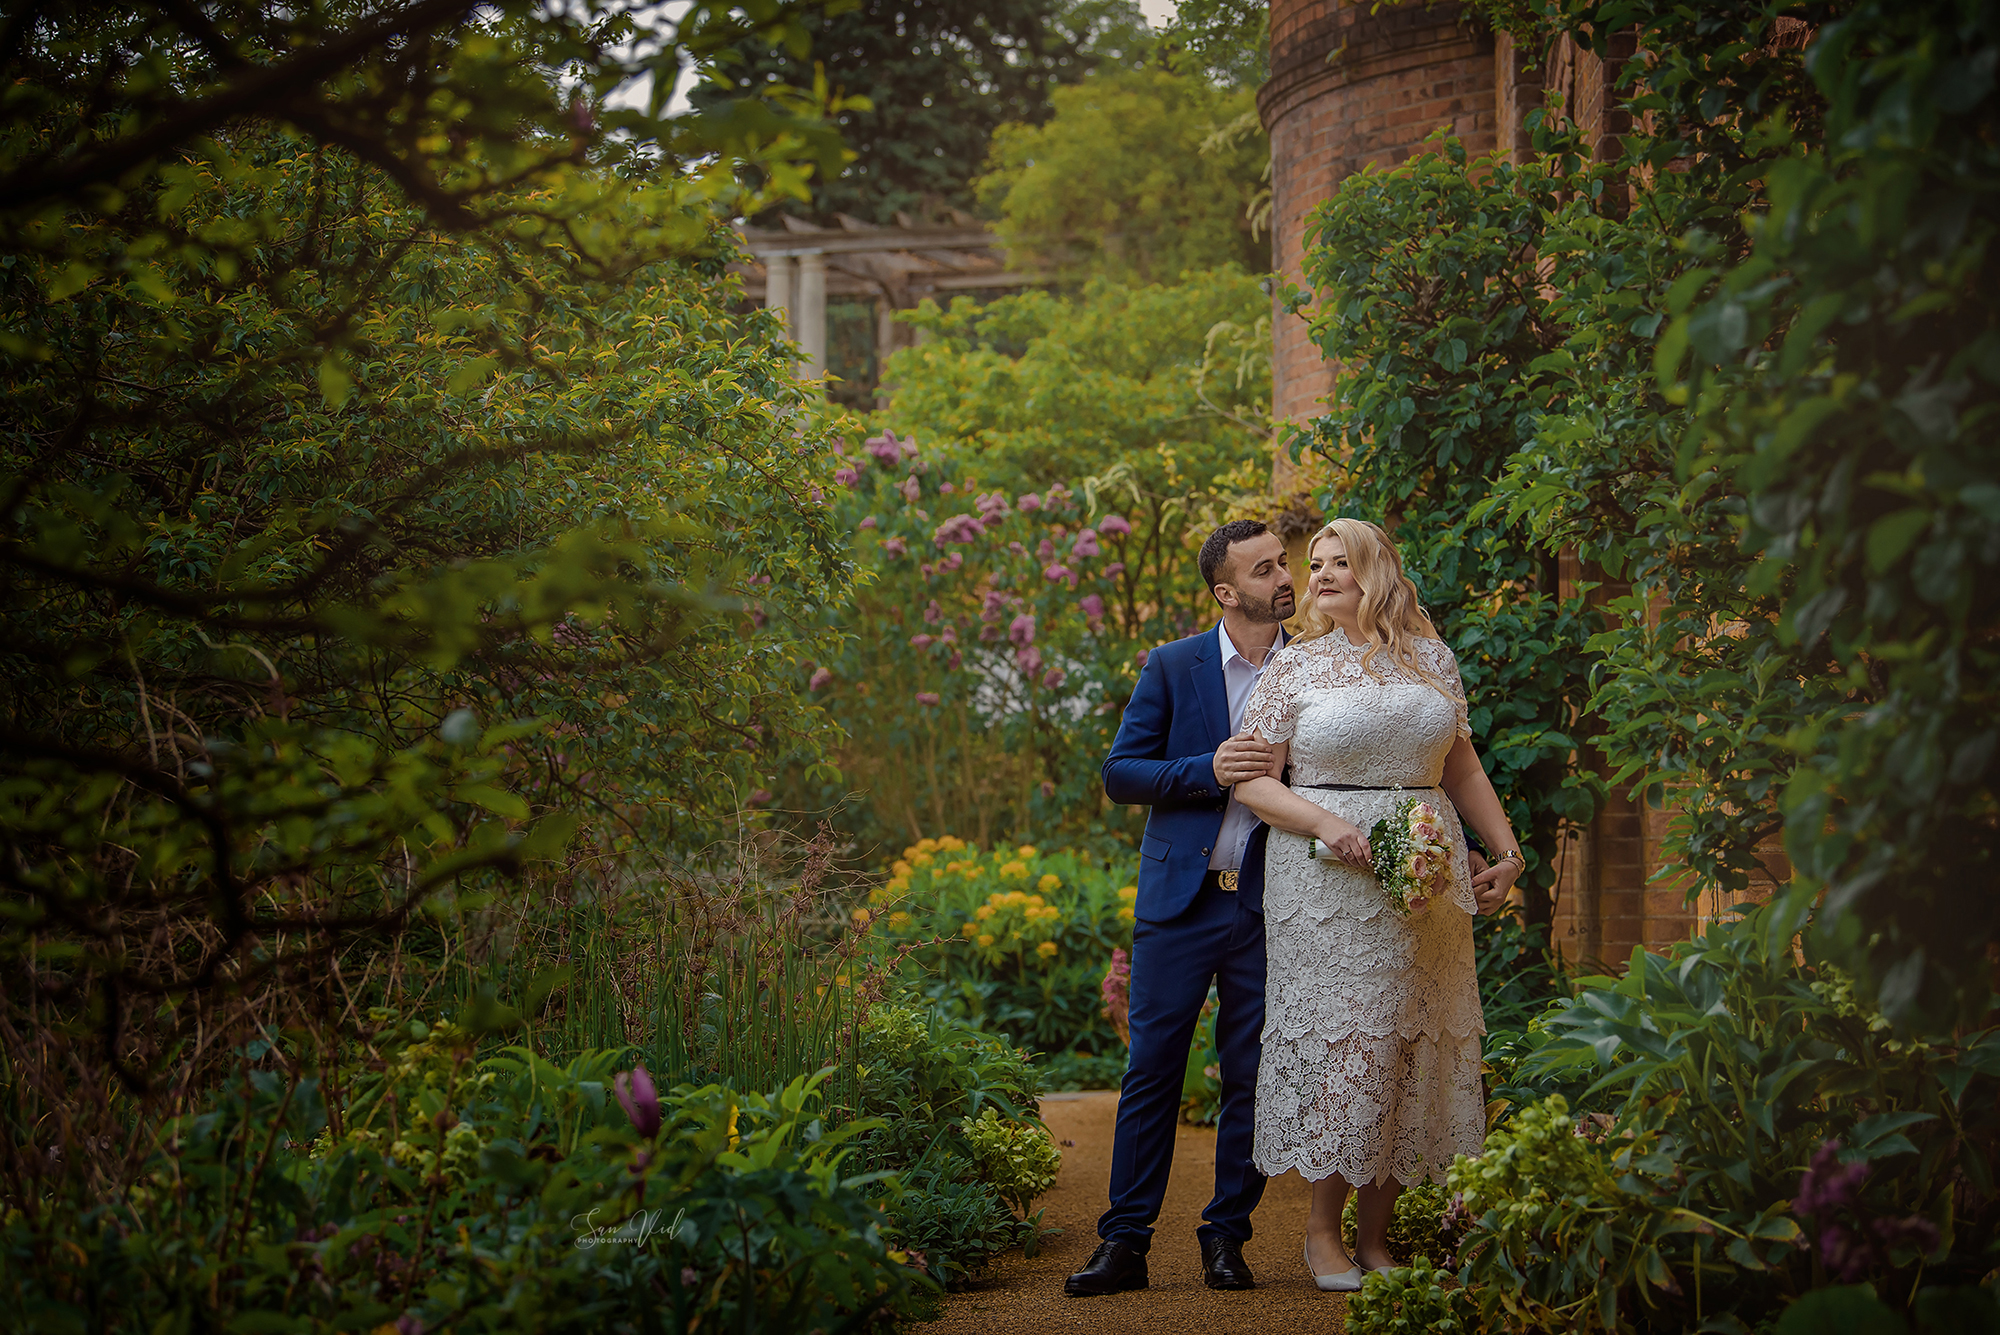 Creative Wedding Photography Couple The Hill Garden and Pergola London